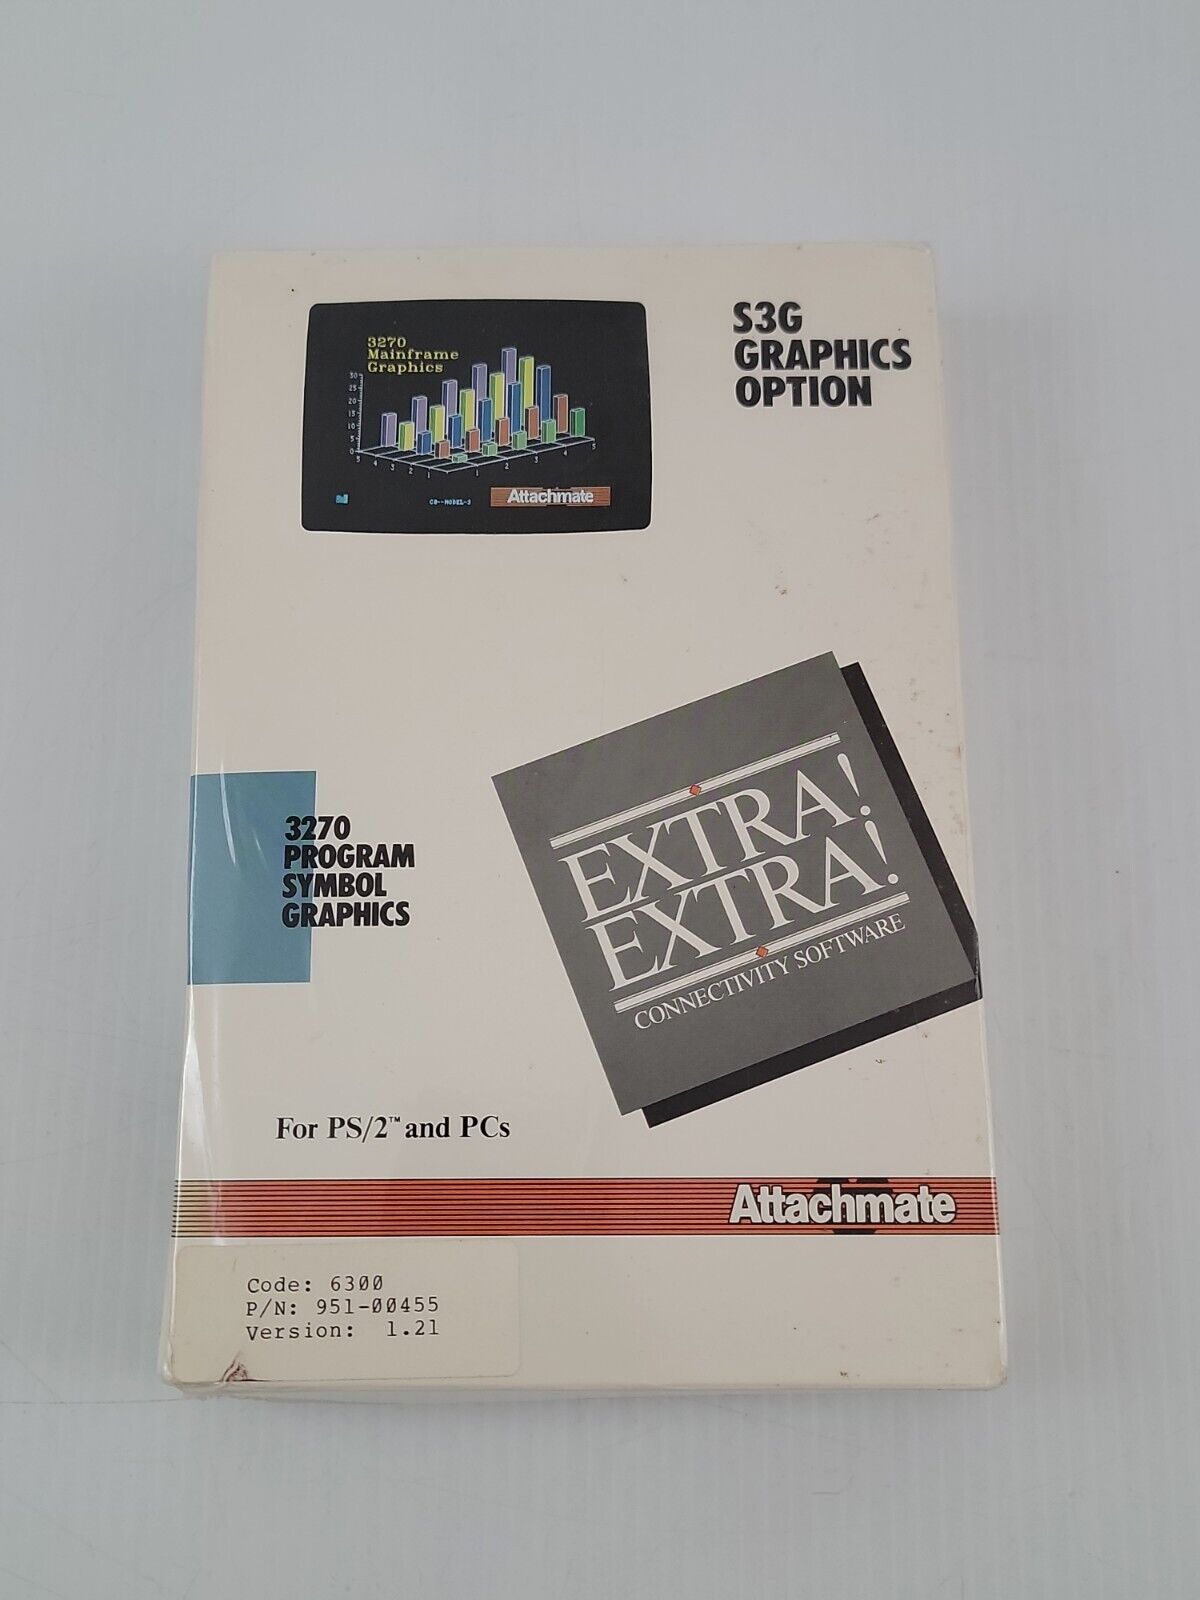 VINTAGE PC IBM SOFTWARE S3G GRAPHICS OPTION BY ATTATCHMATE 1987 PROGRAM GRAPHICS